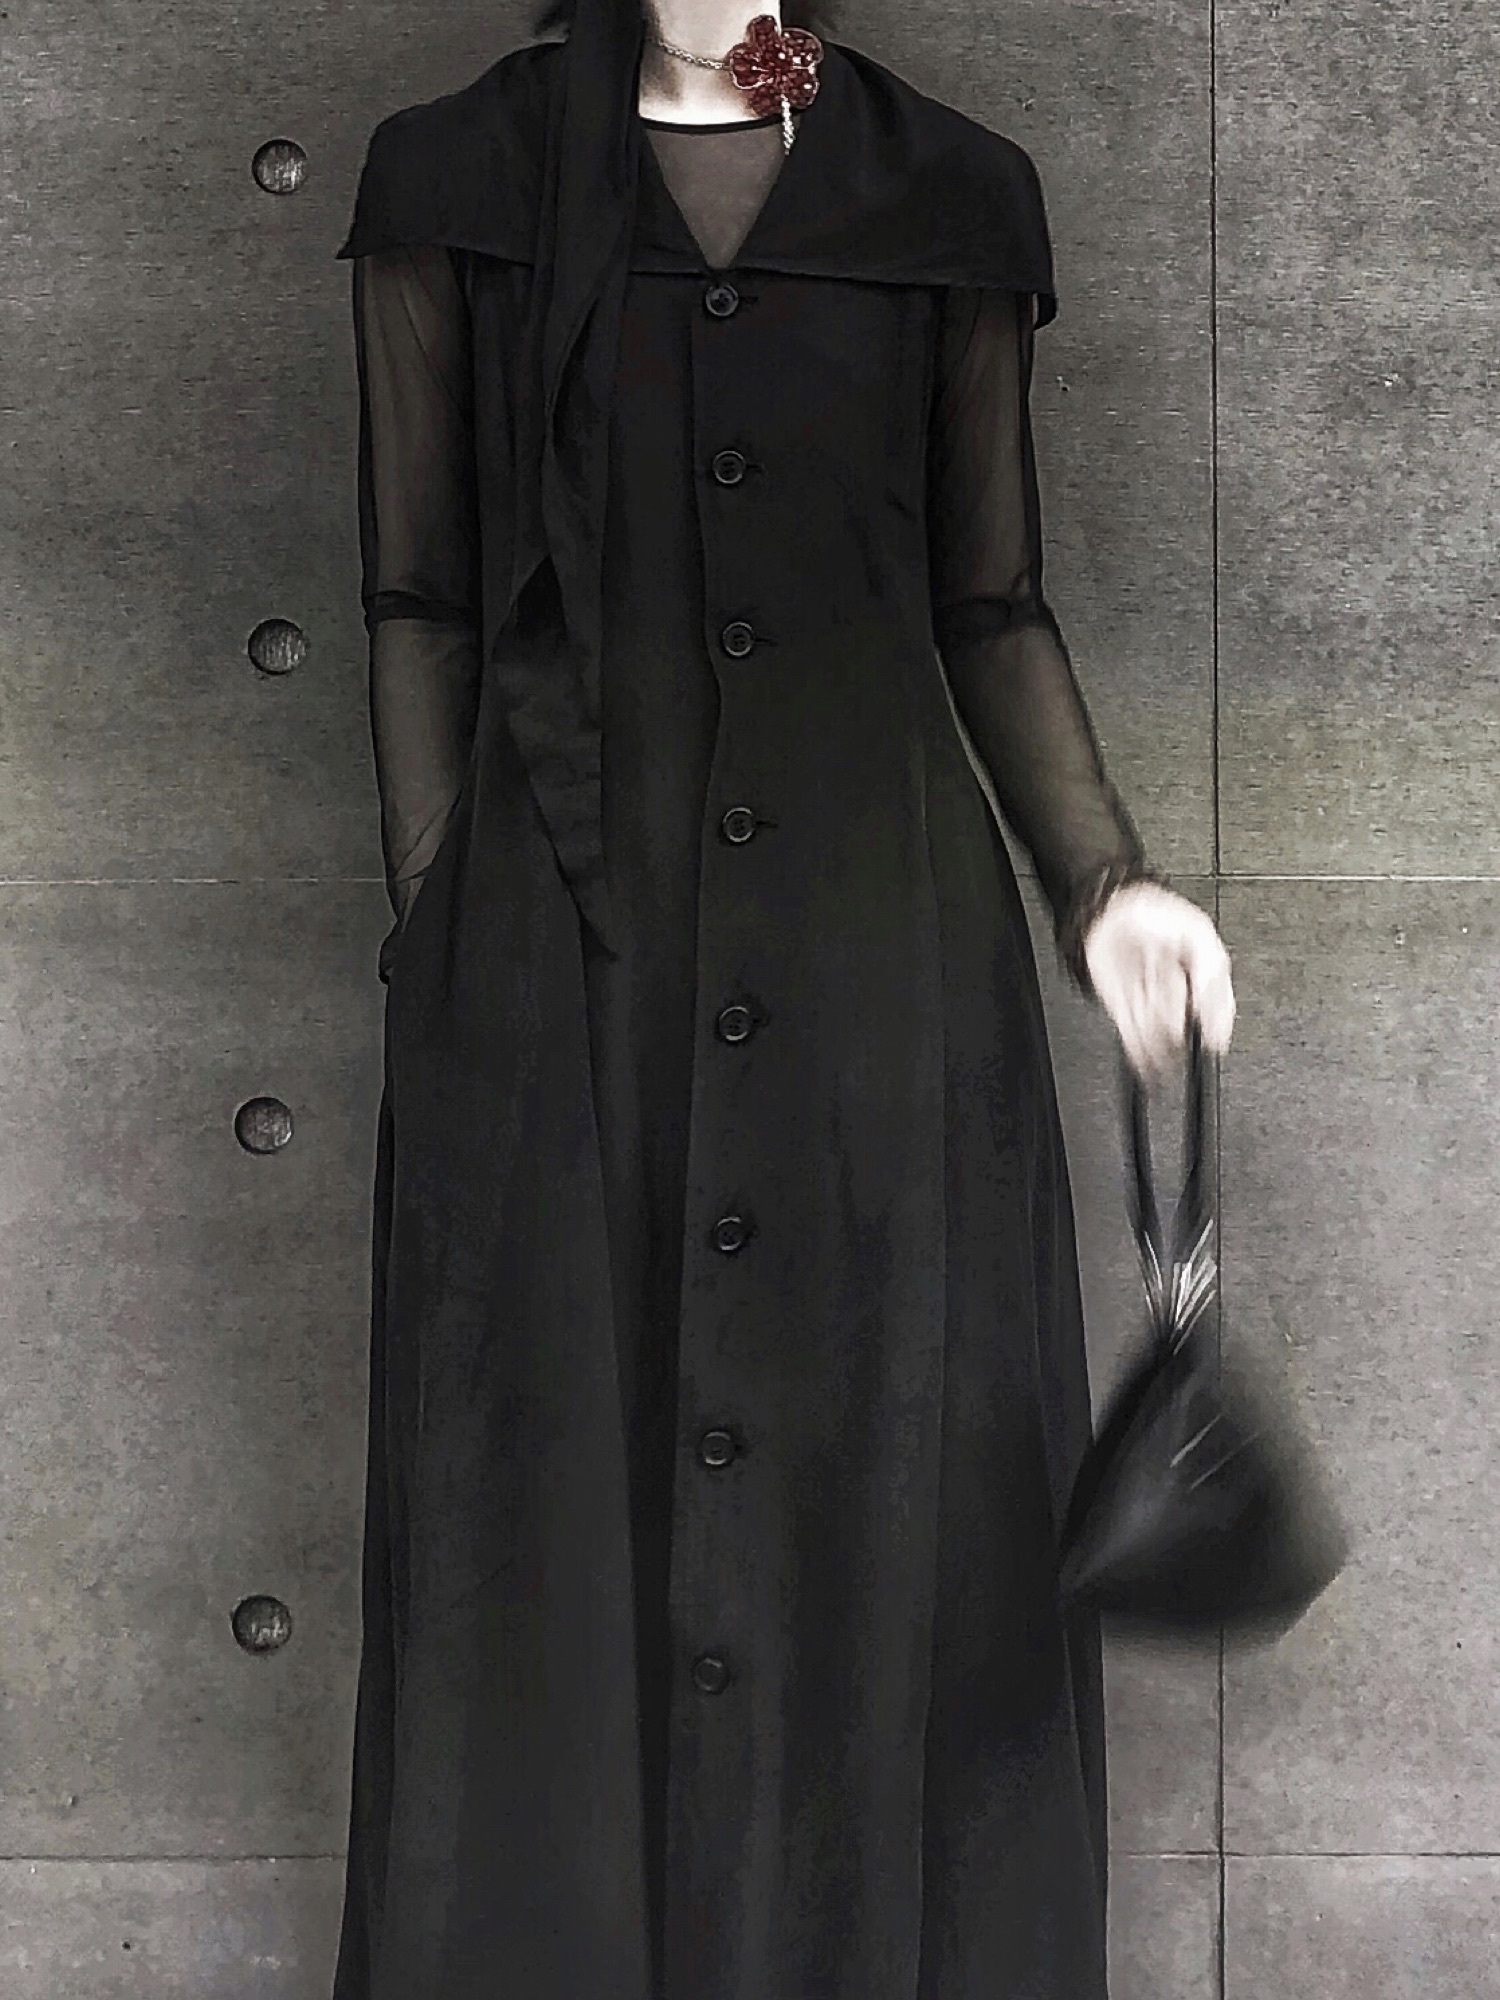 Yohji Yamamotoのジャンパースカートを使った人気ファッション